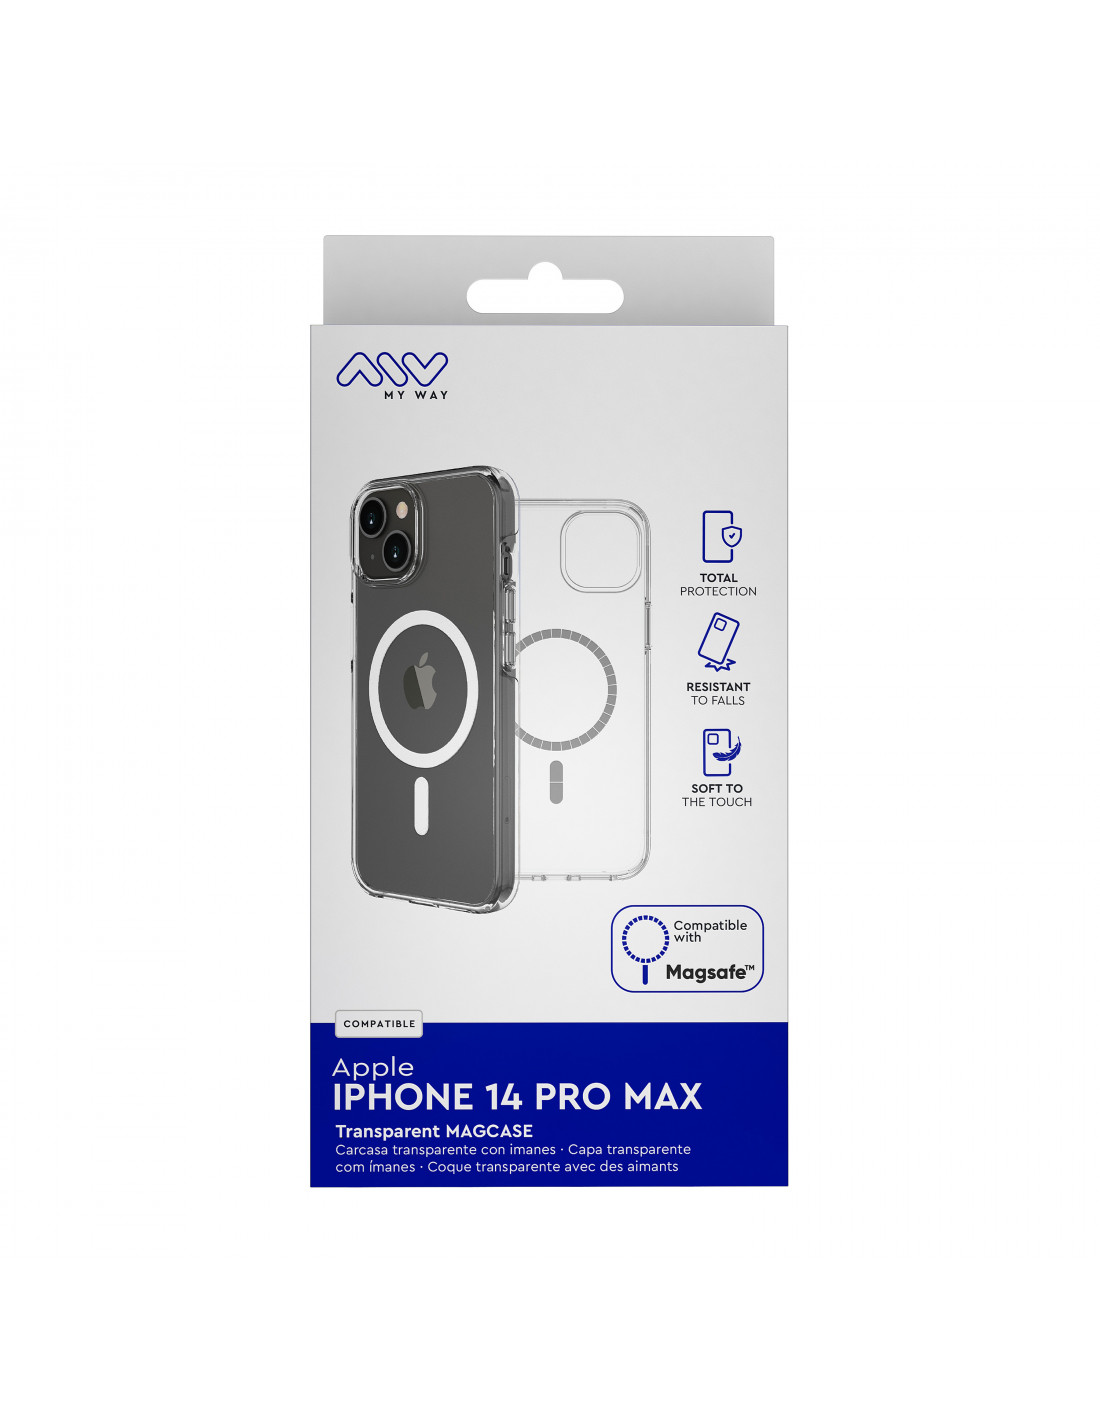 Funda transparente iPhone 14 Pro Max compatible con Magsafe 